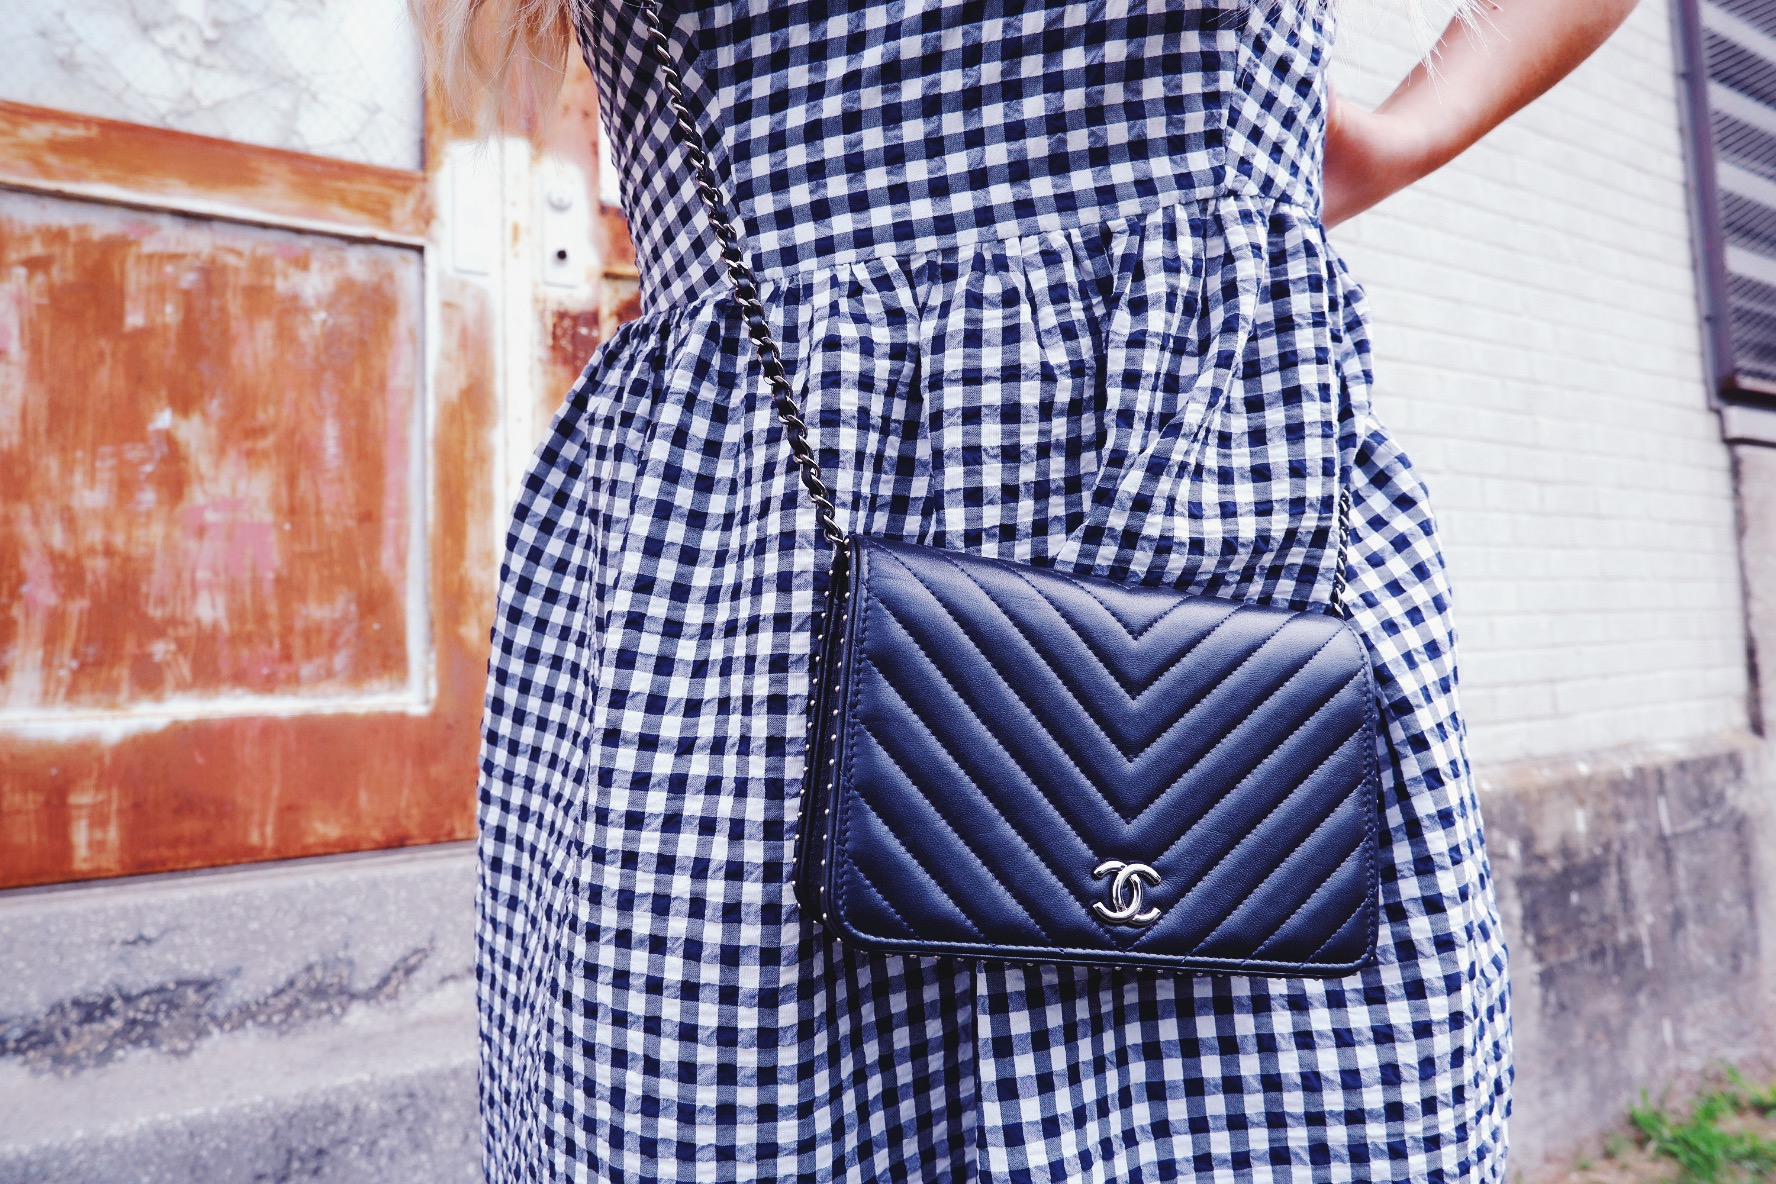 Chanel-handbag-Gingham-dress-July-4th-Style